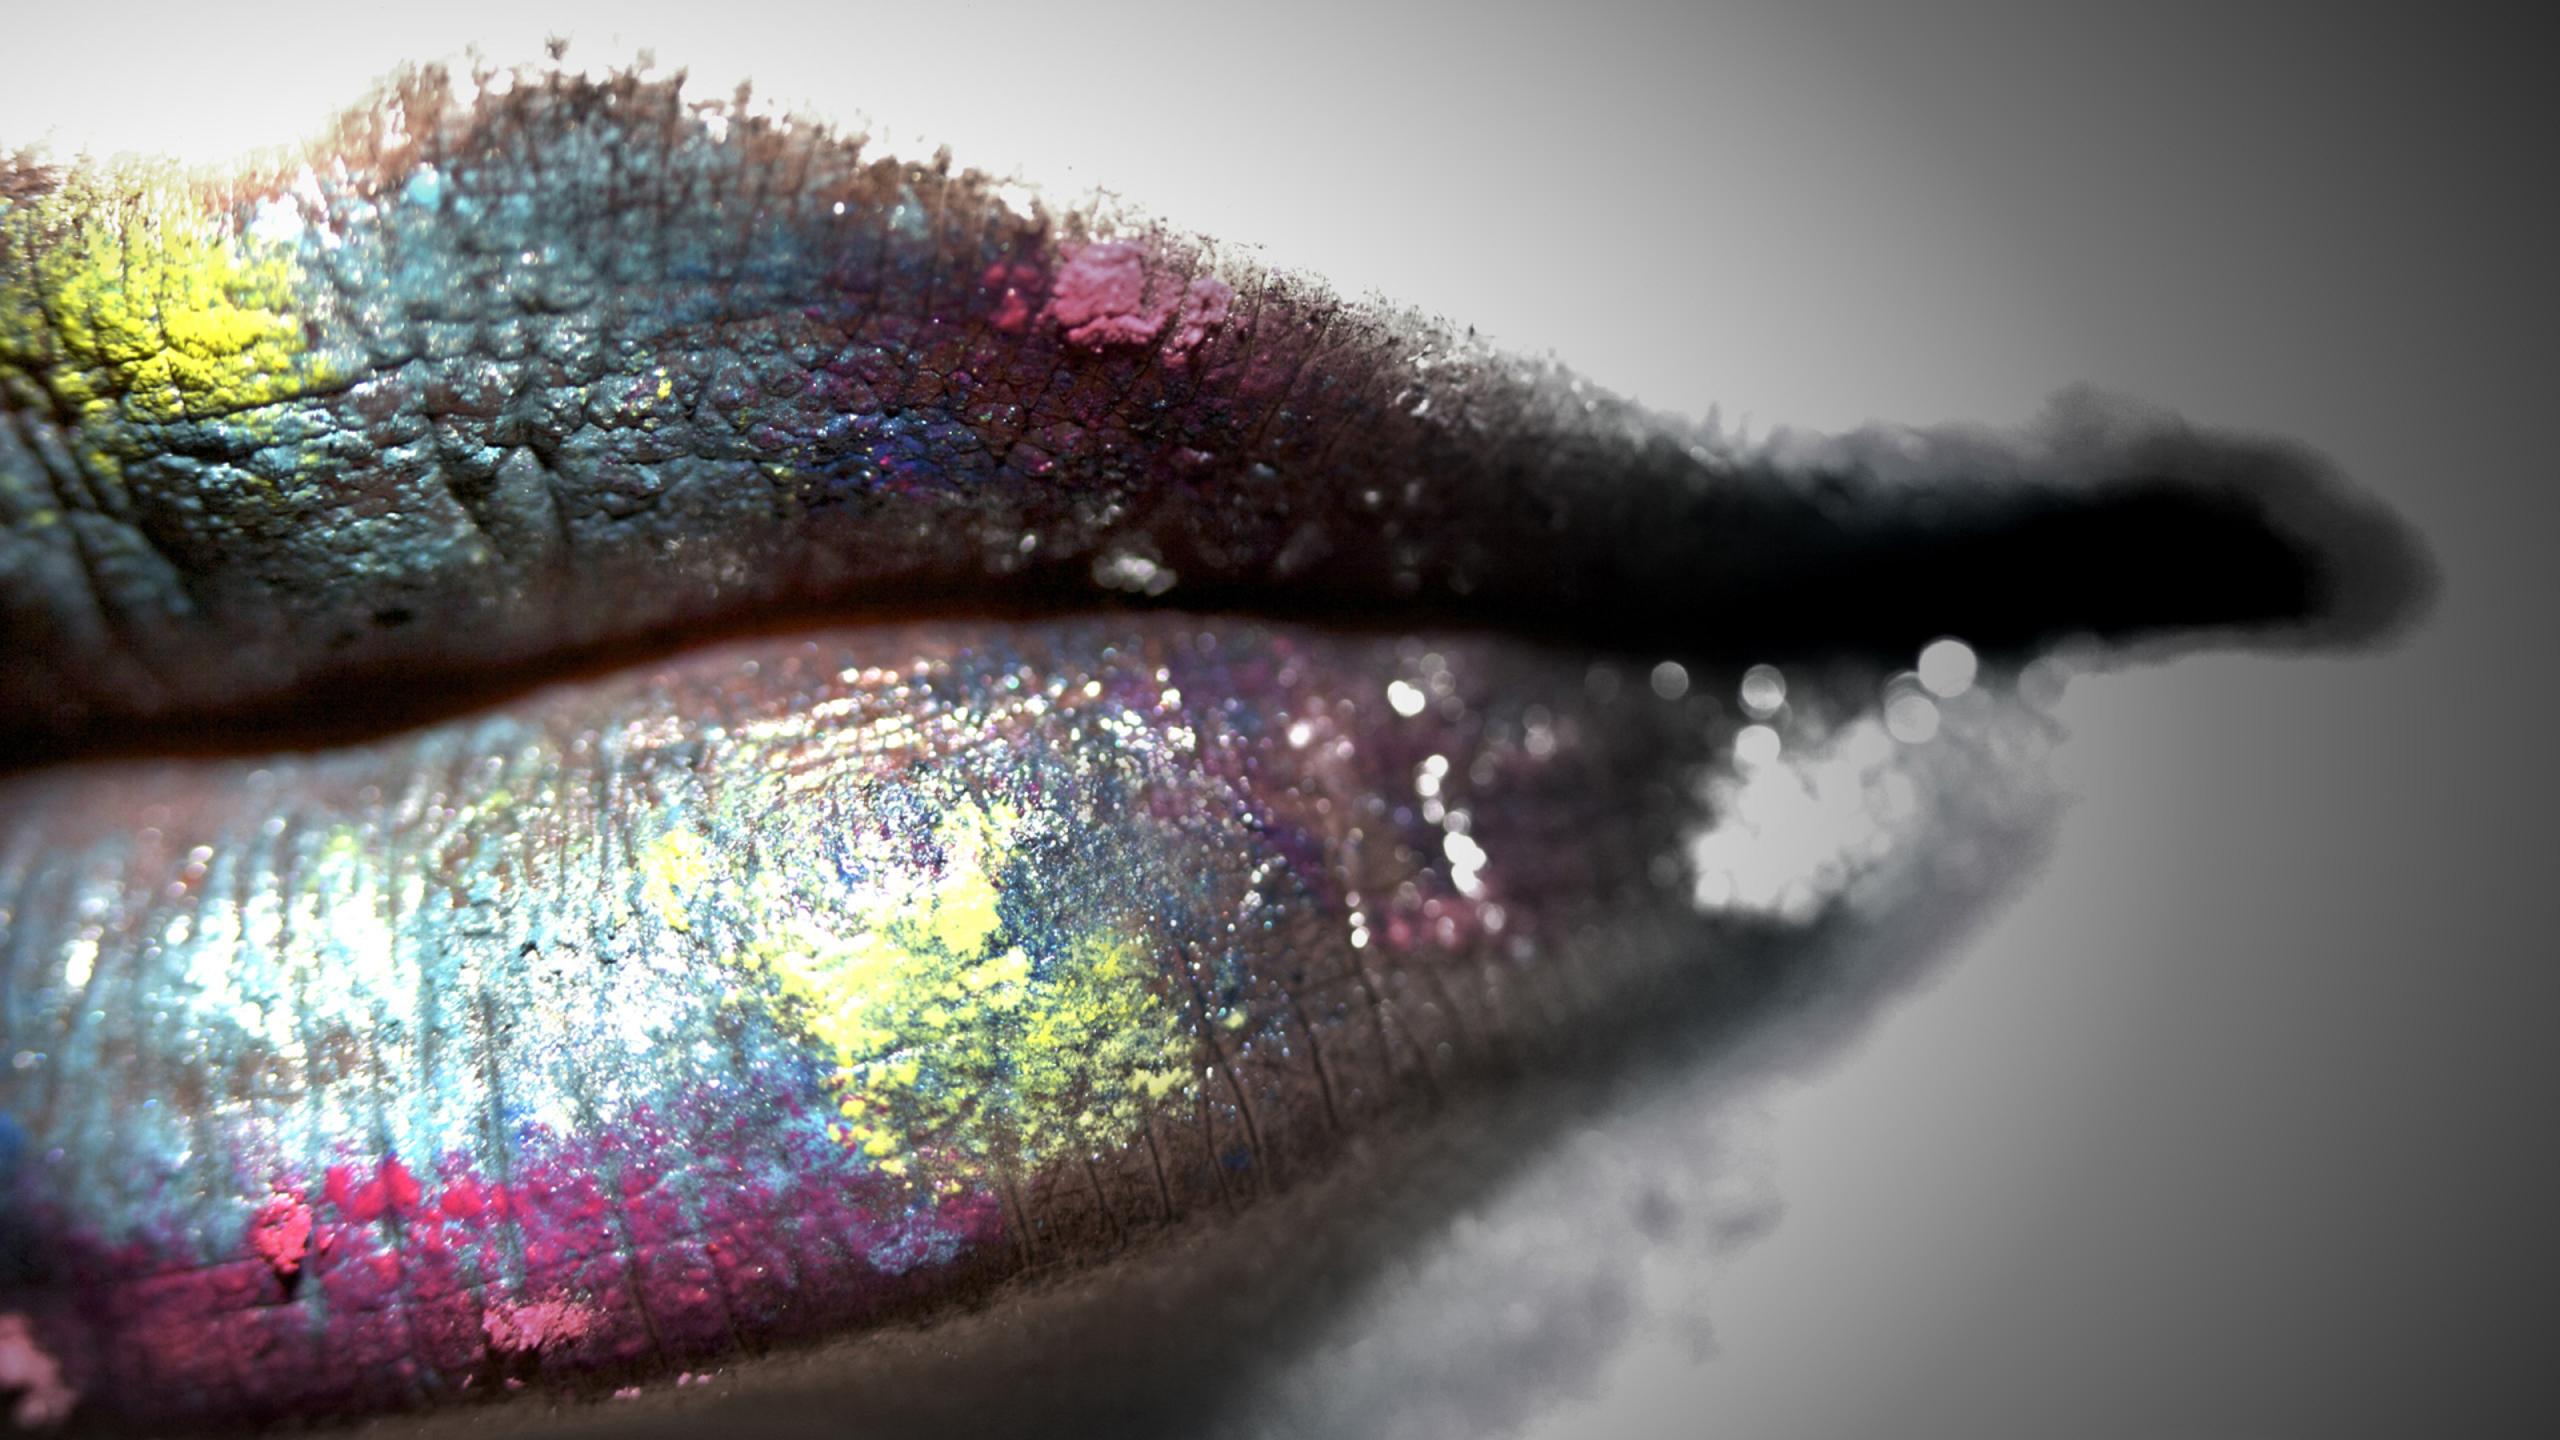 Glitter Lips Wallpapers